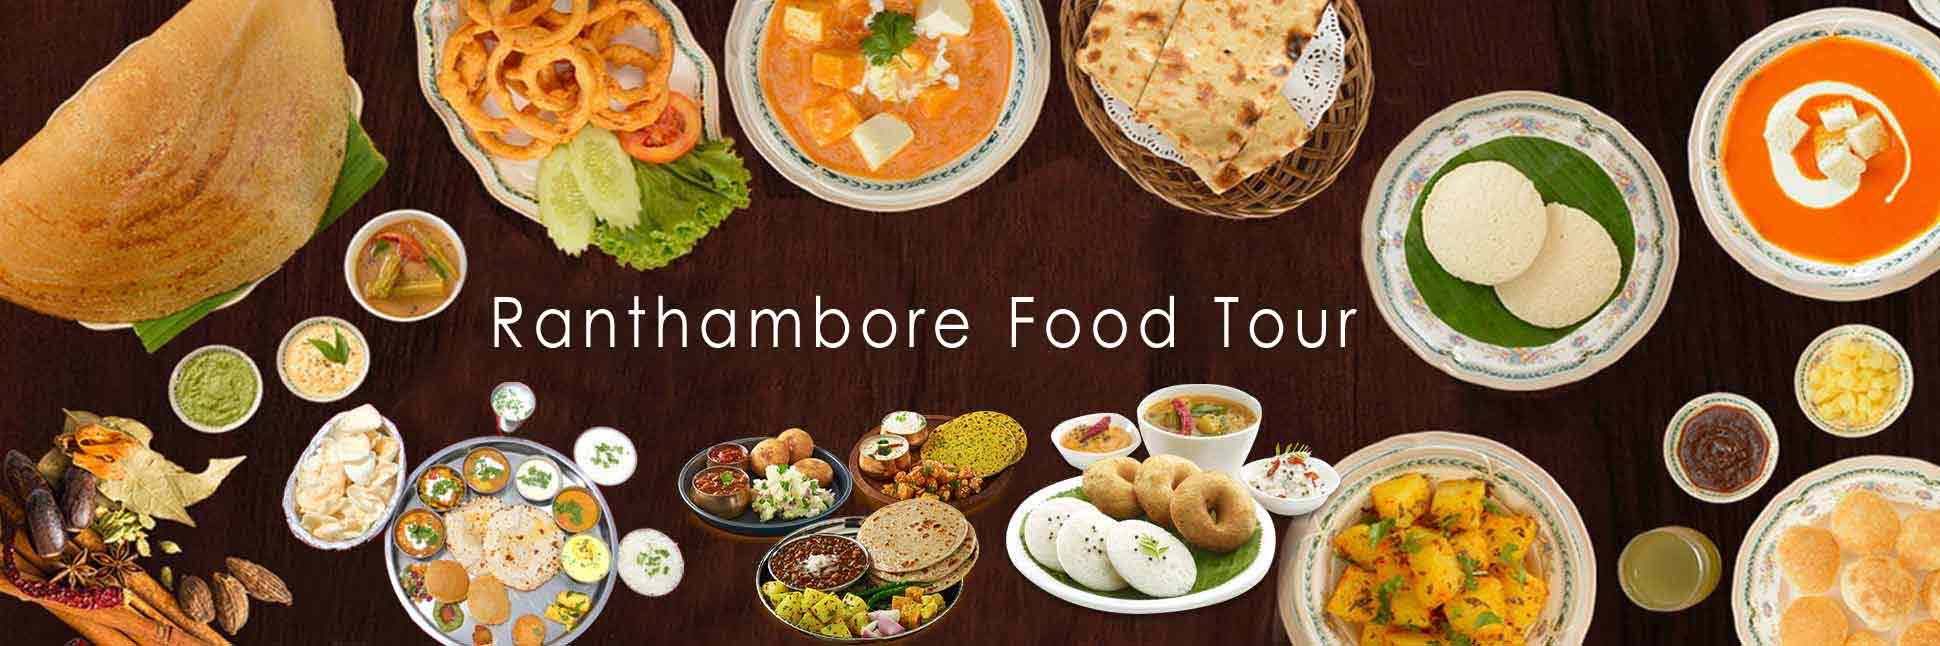 Ranthambore Food Tour